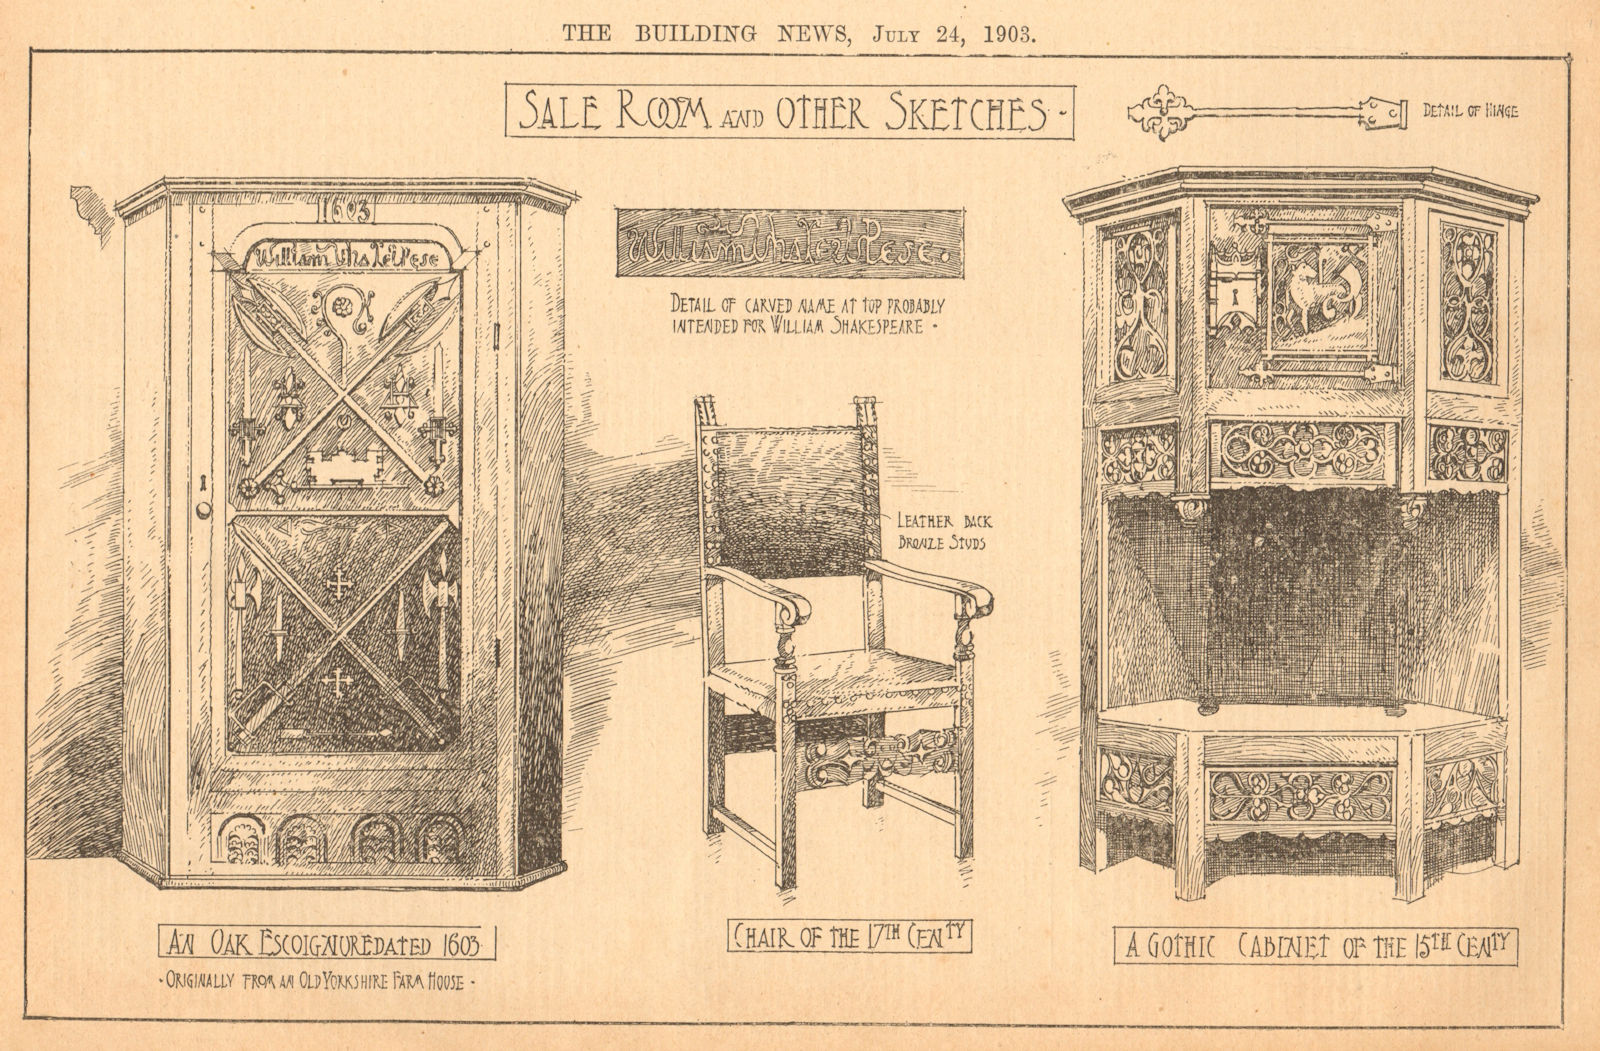 Furniture. 17C chair leather back, 1603 oak Encoignure, 15C Gothic cabinet 1903